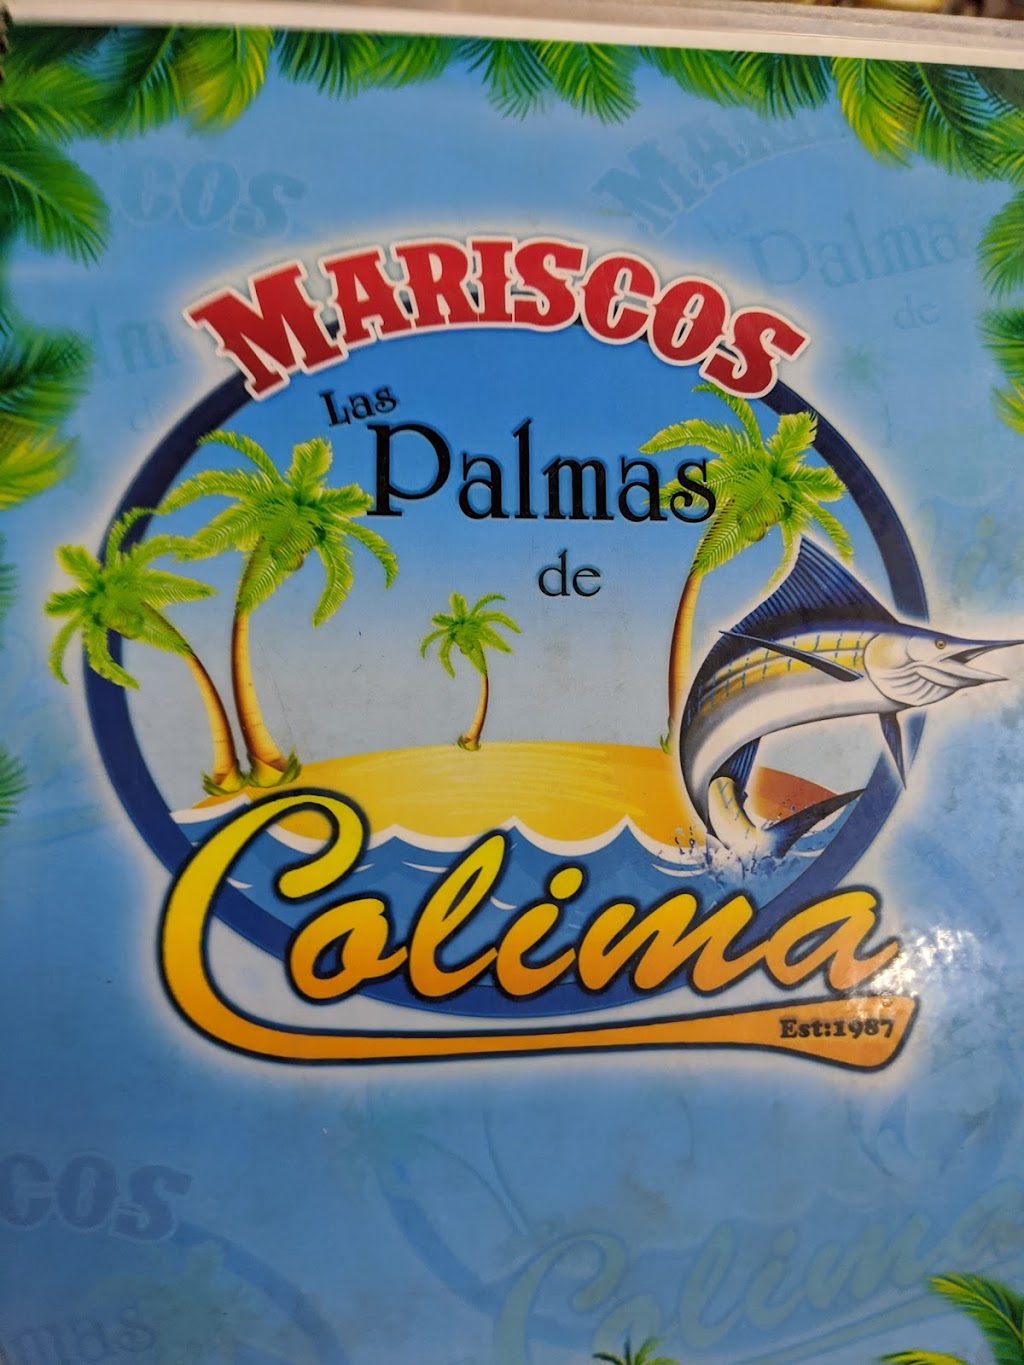 Mariscos Las Palmas de Colima | 1553 E 120th St, Los Angeles, CA 90059 | Phone: (323) 357-1272